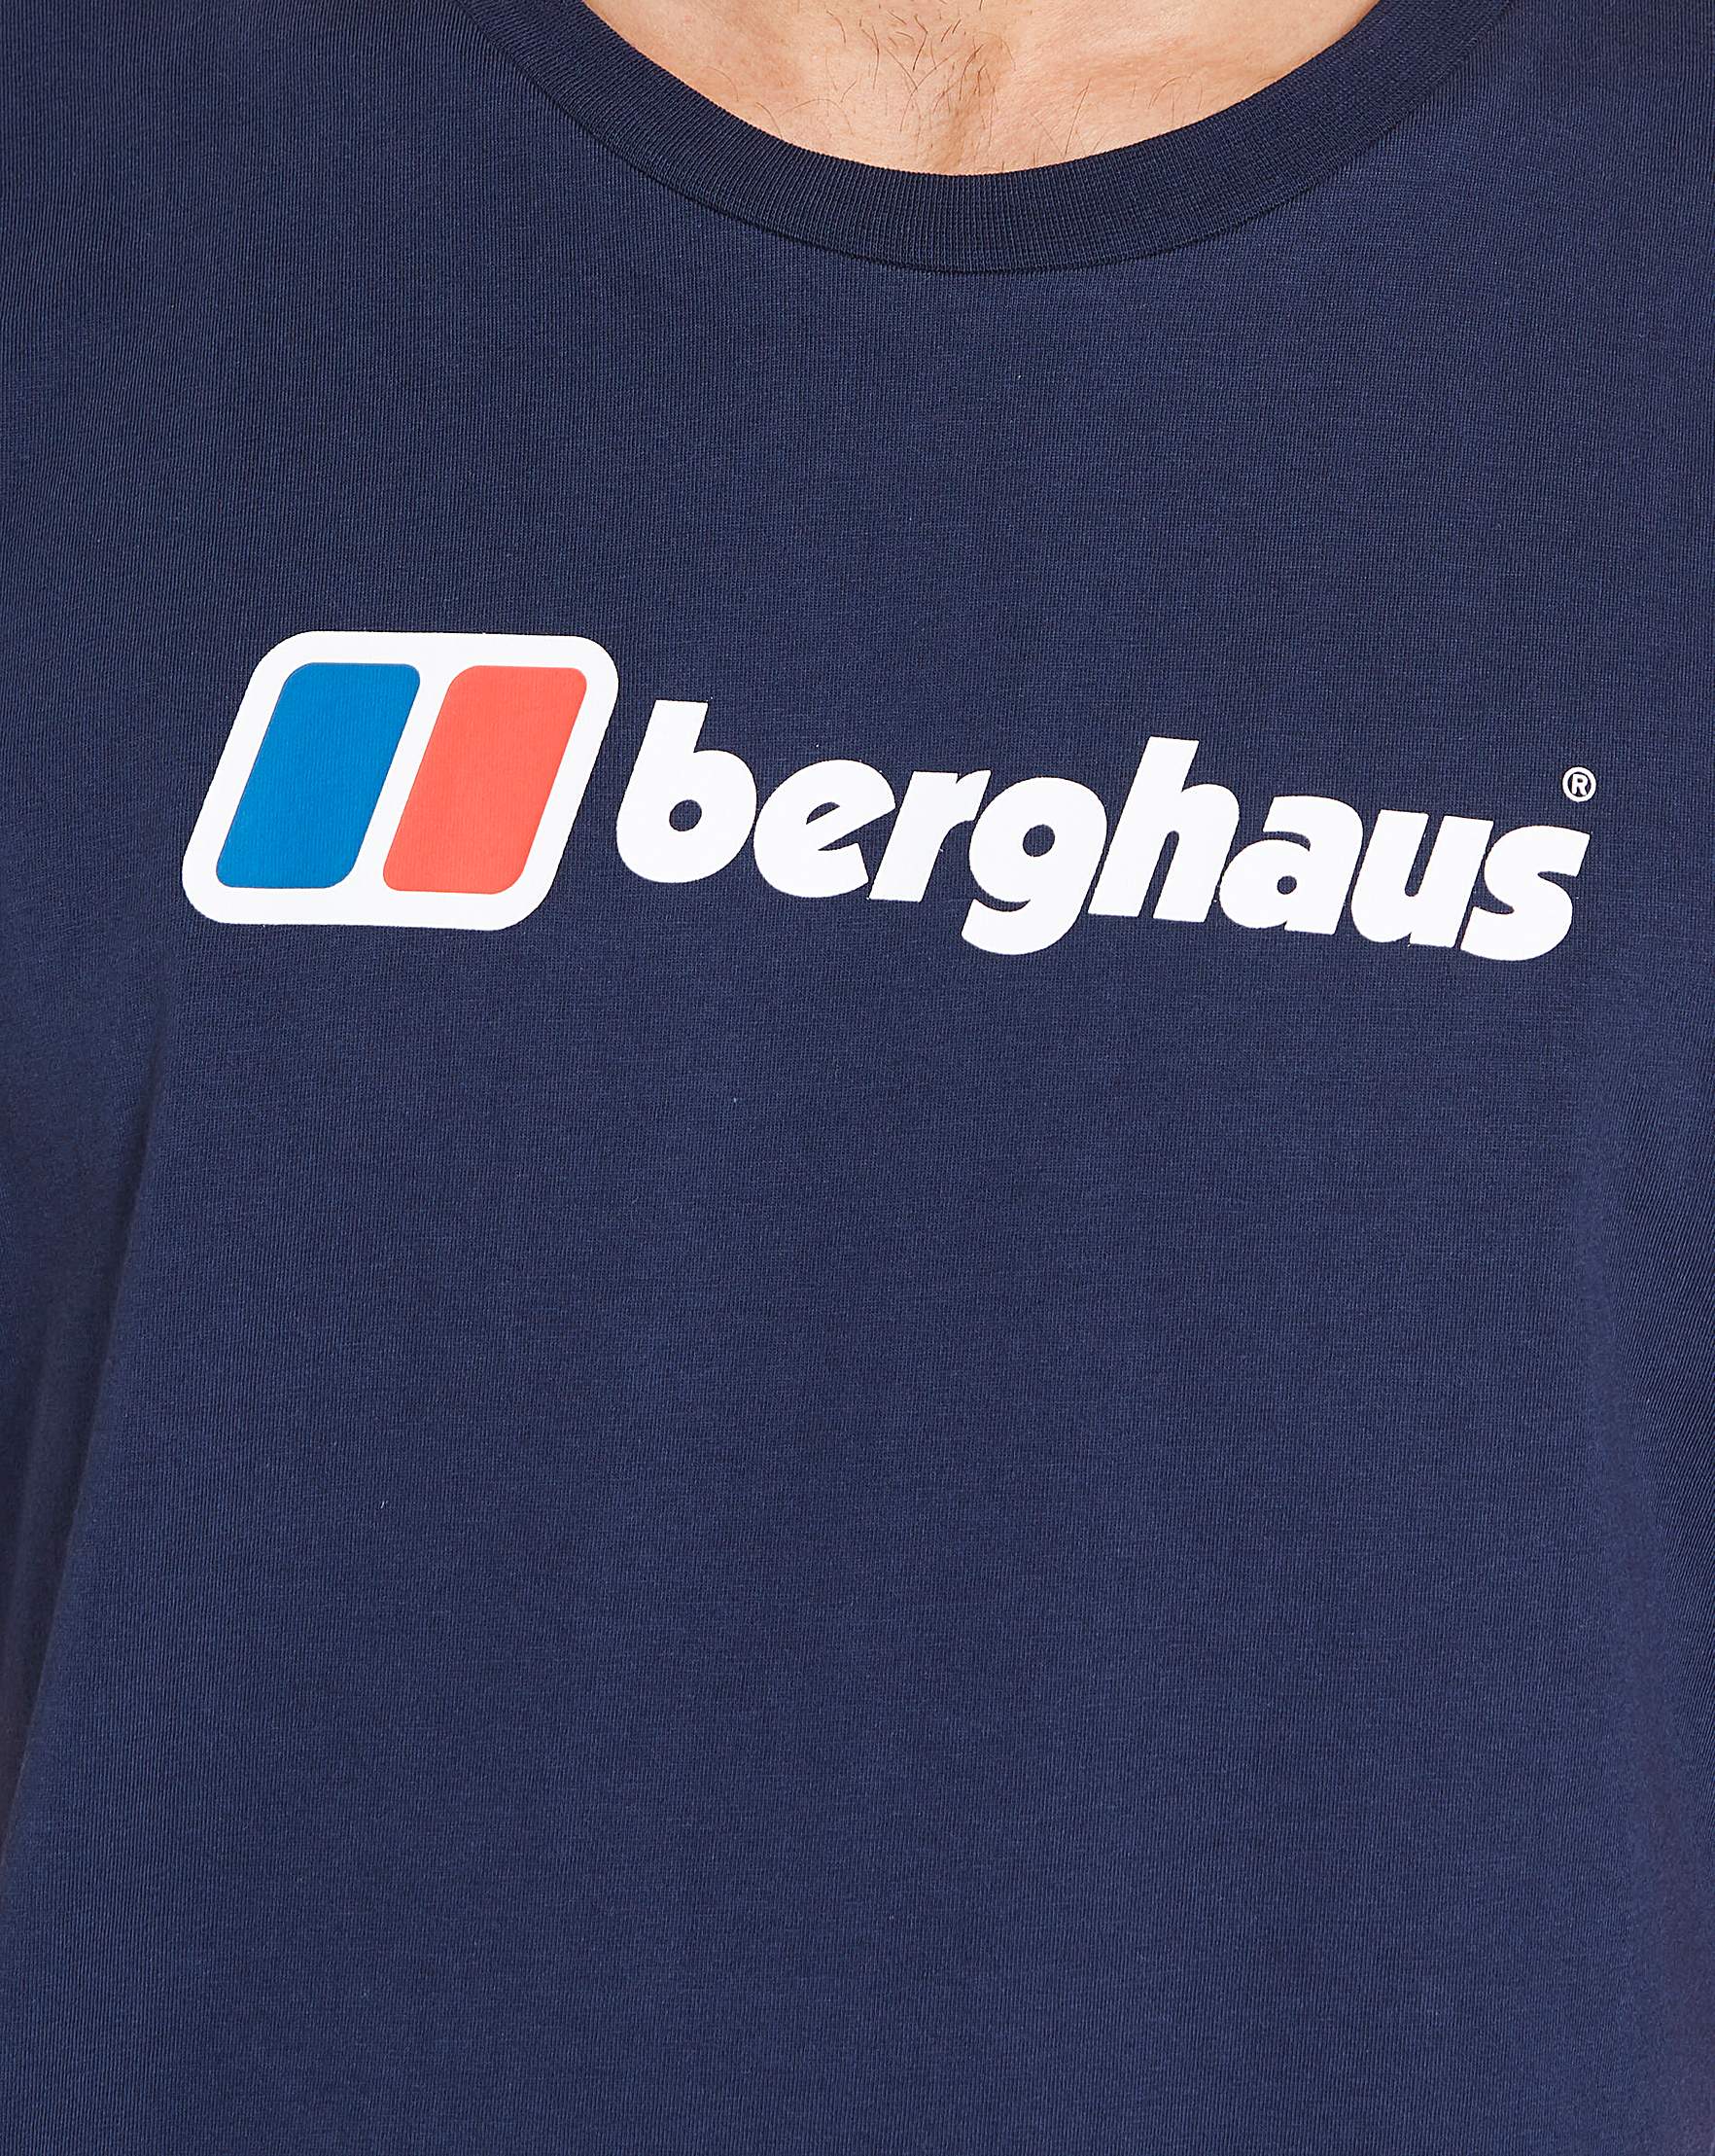 Berghaus Logo - Berghaus Big Corporate Logo T-Shirt